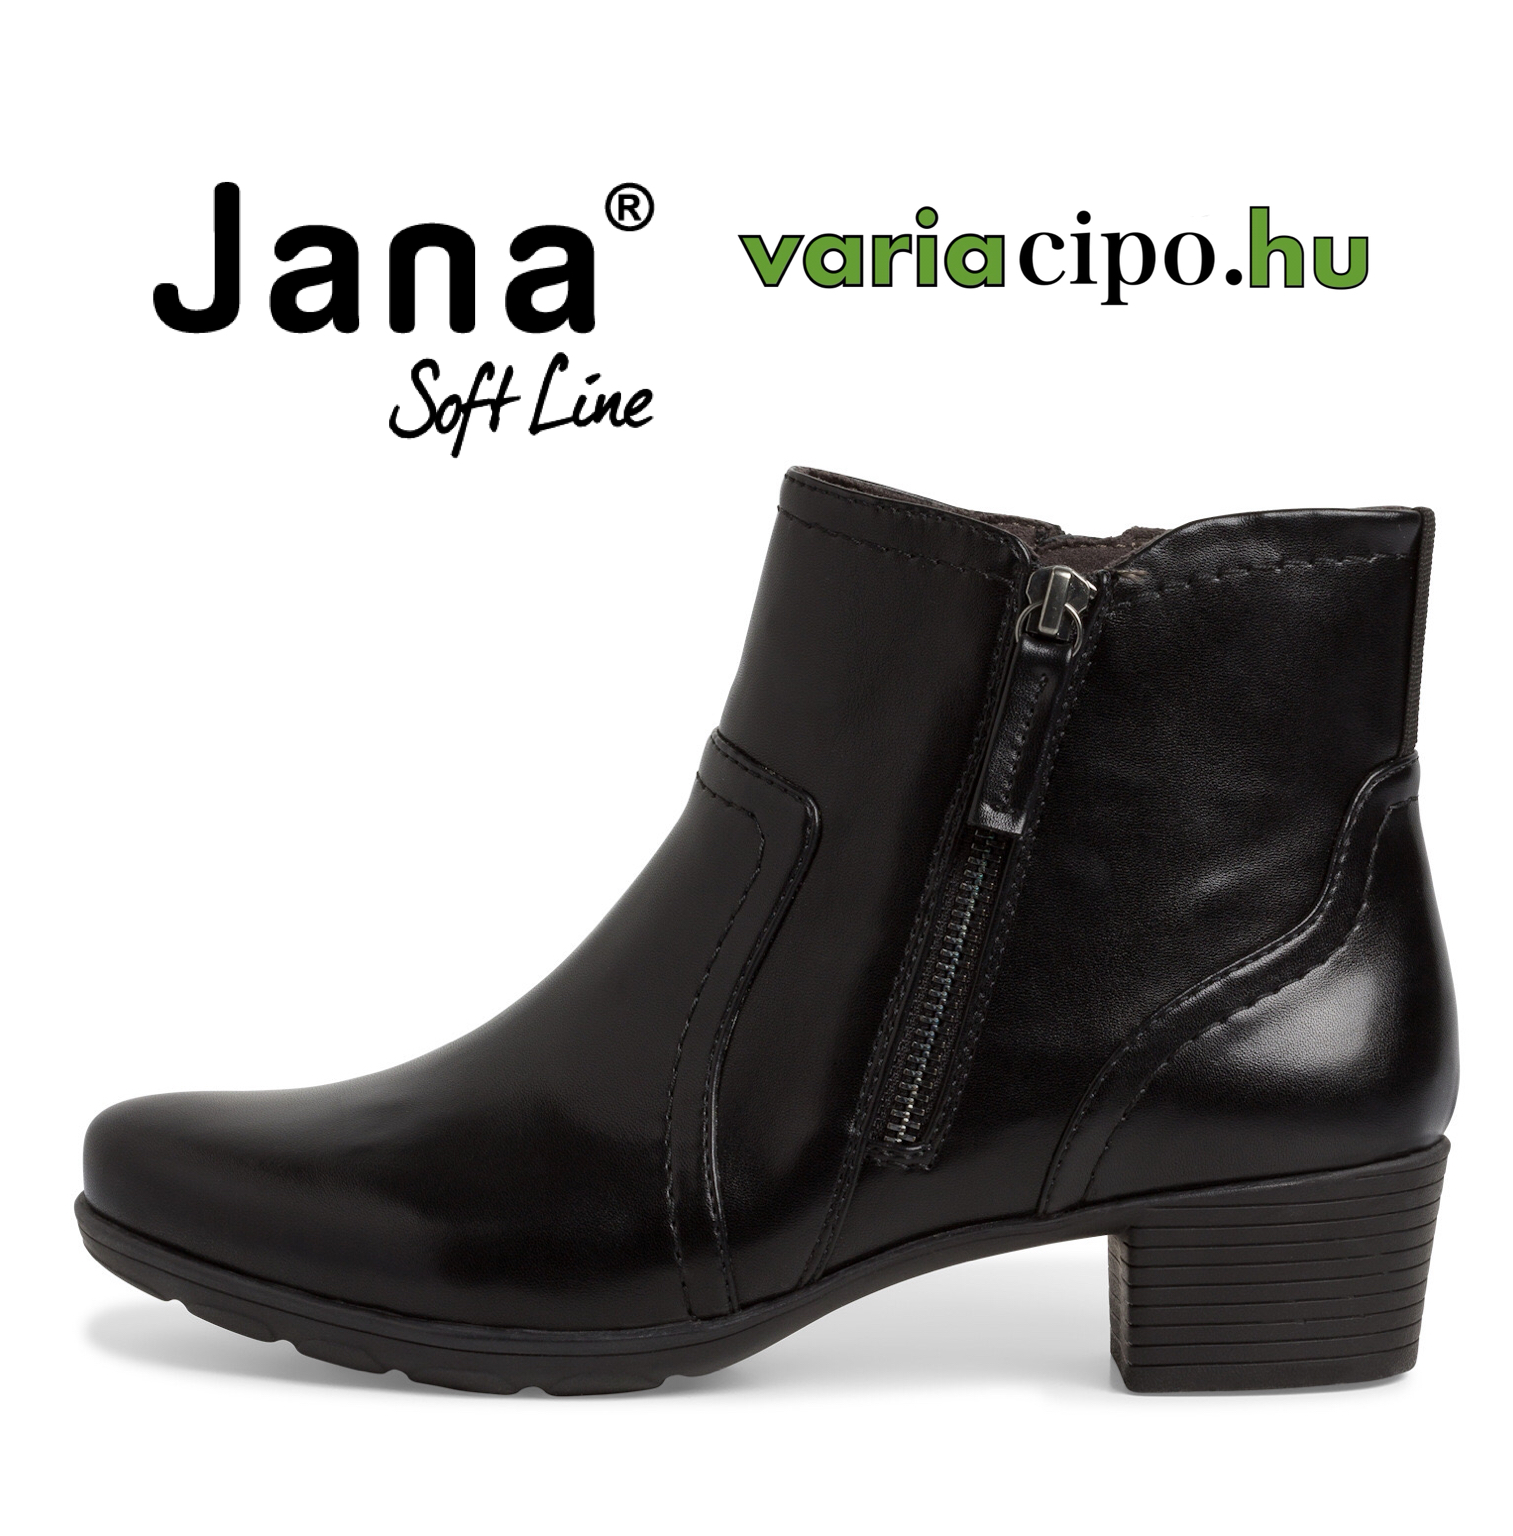 Jana fekete bokacsizma, 8-25373-41 001 black